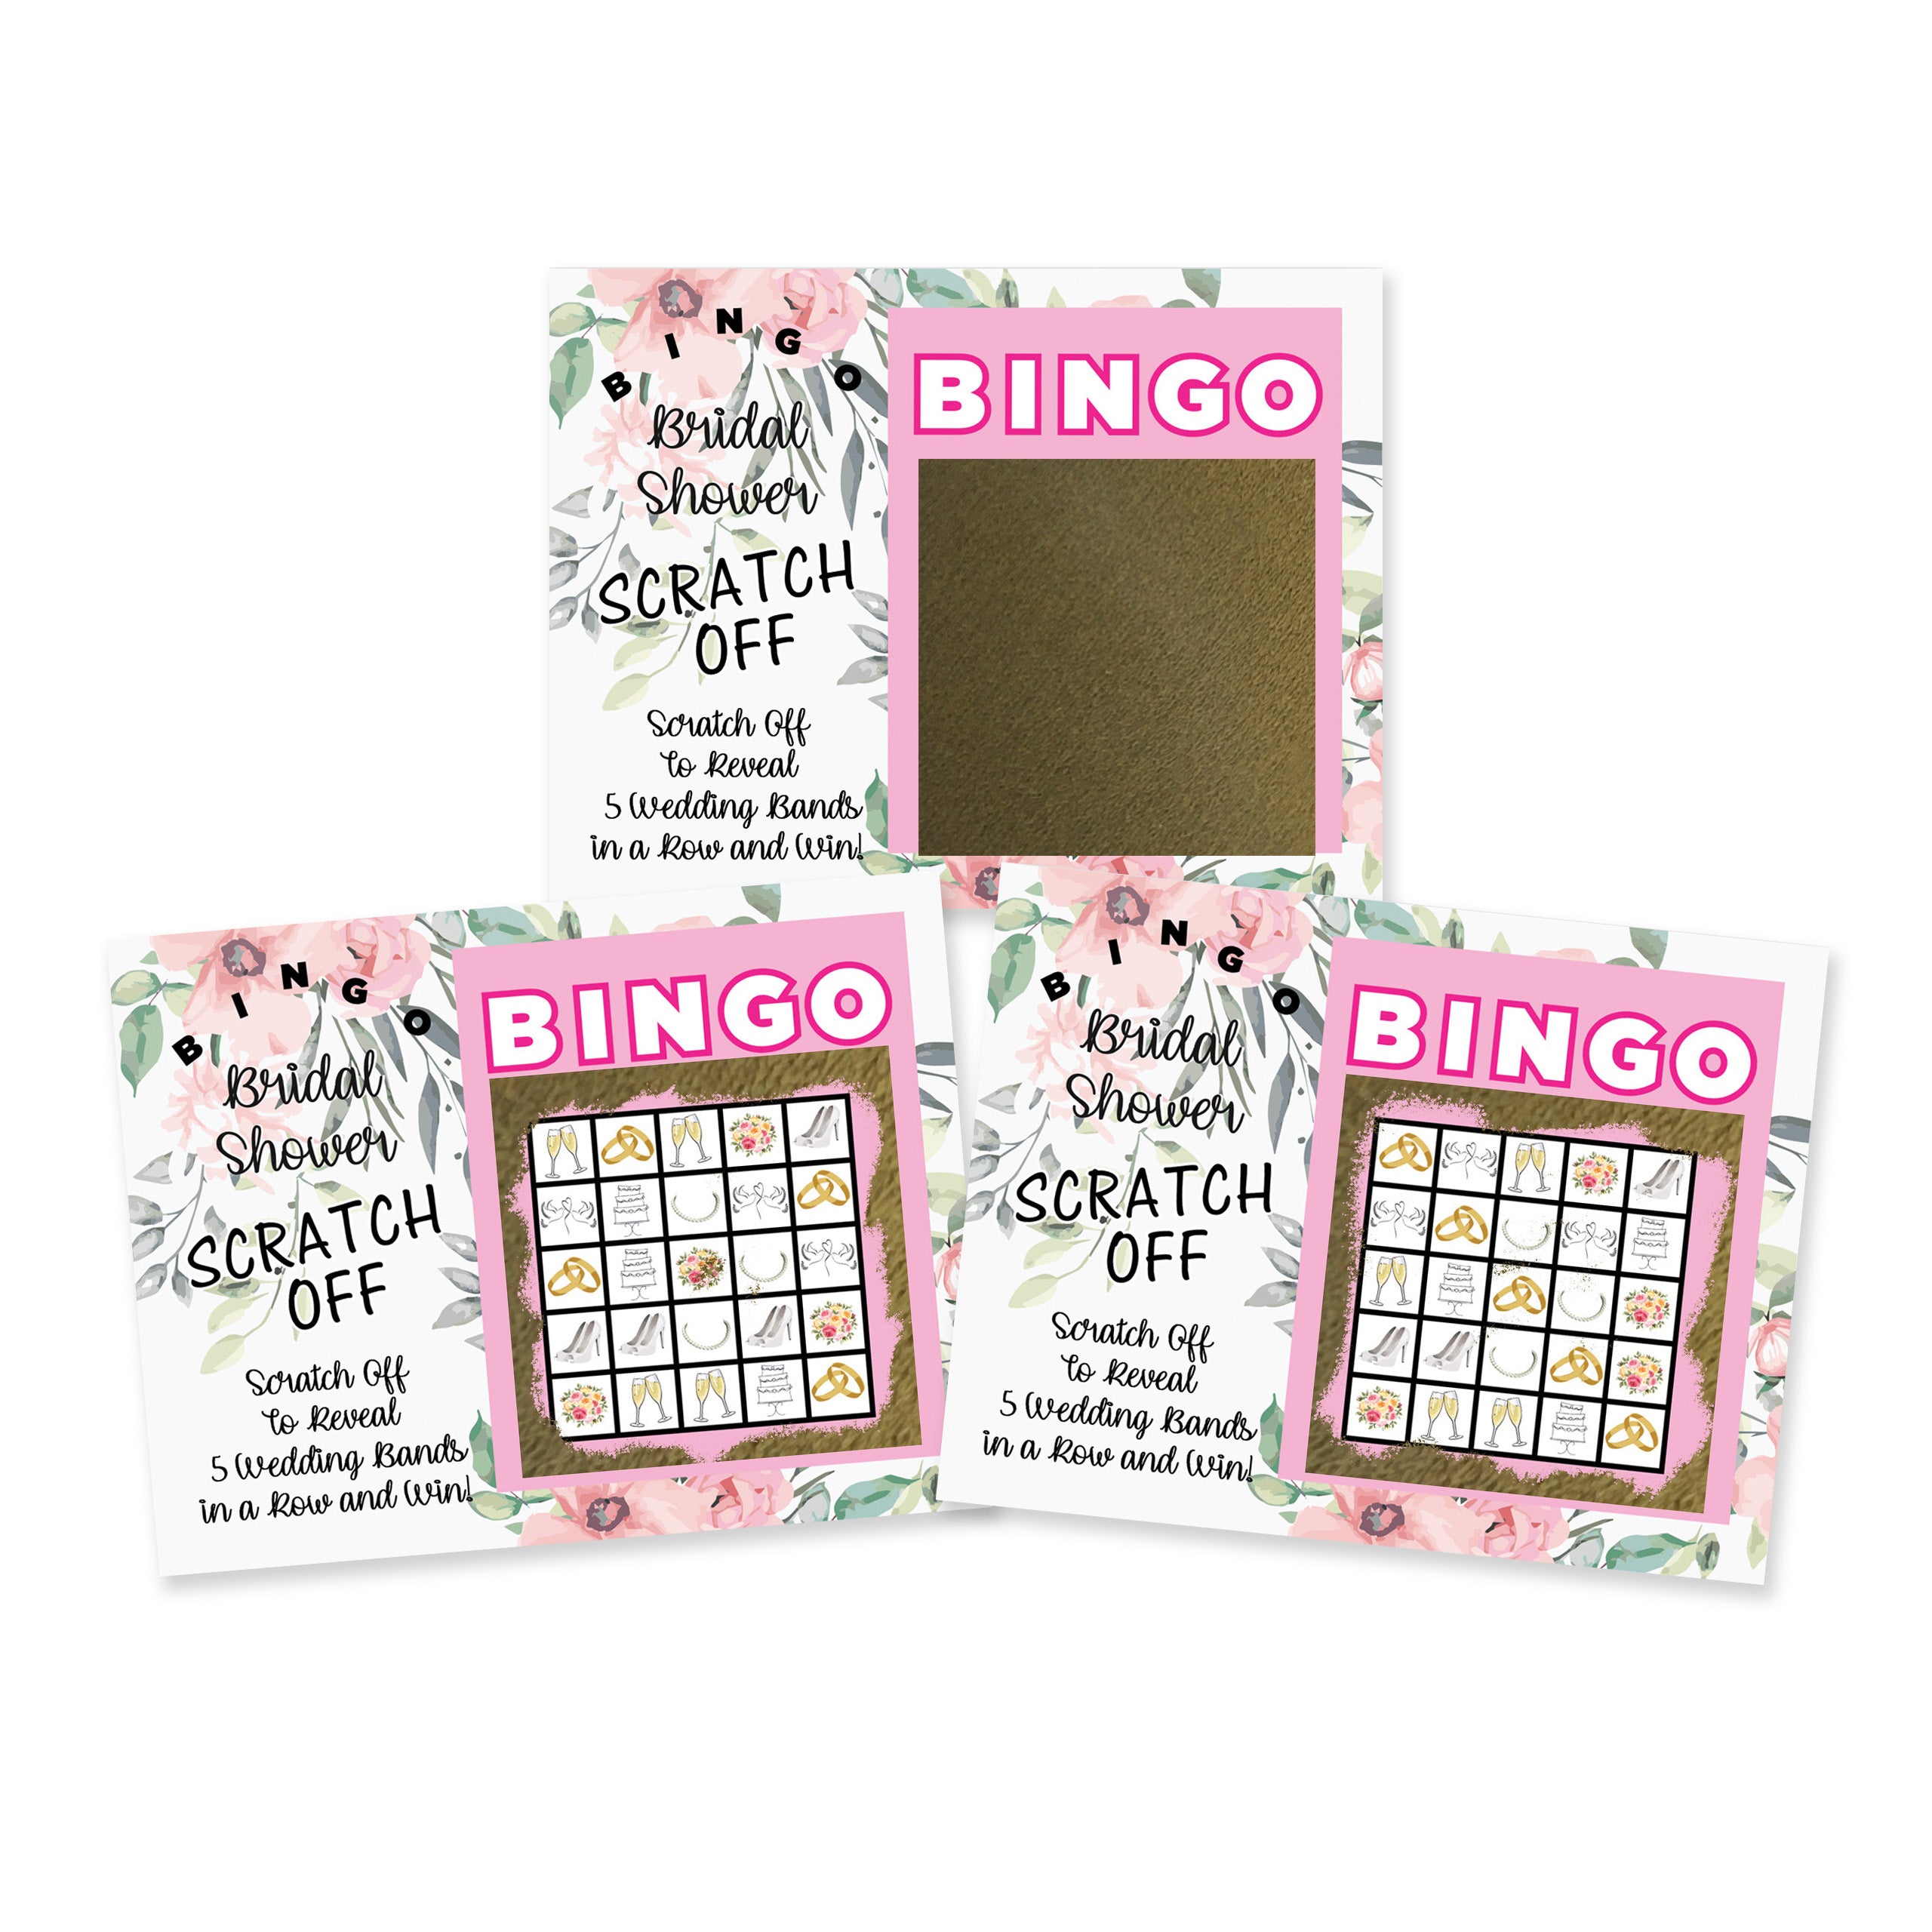 Bridal Shower Flowers BINGO Scratch Off Game Cards 26 Pack - 2 Bingo and 24 Non-Bingo Cards